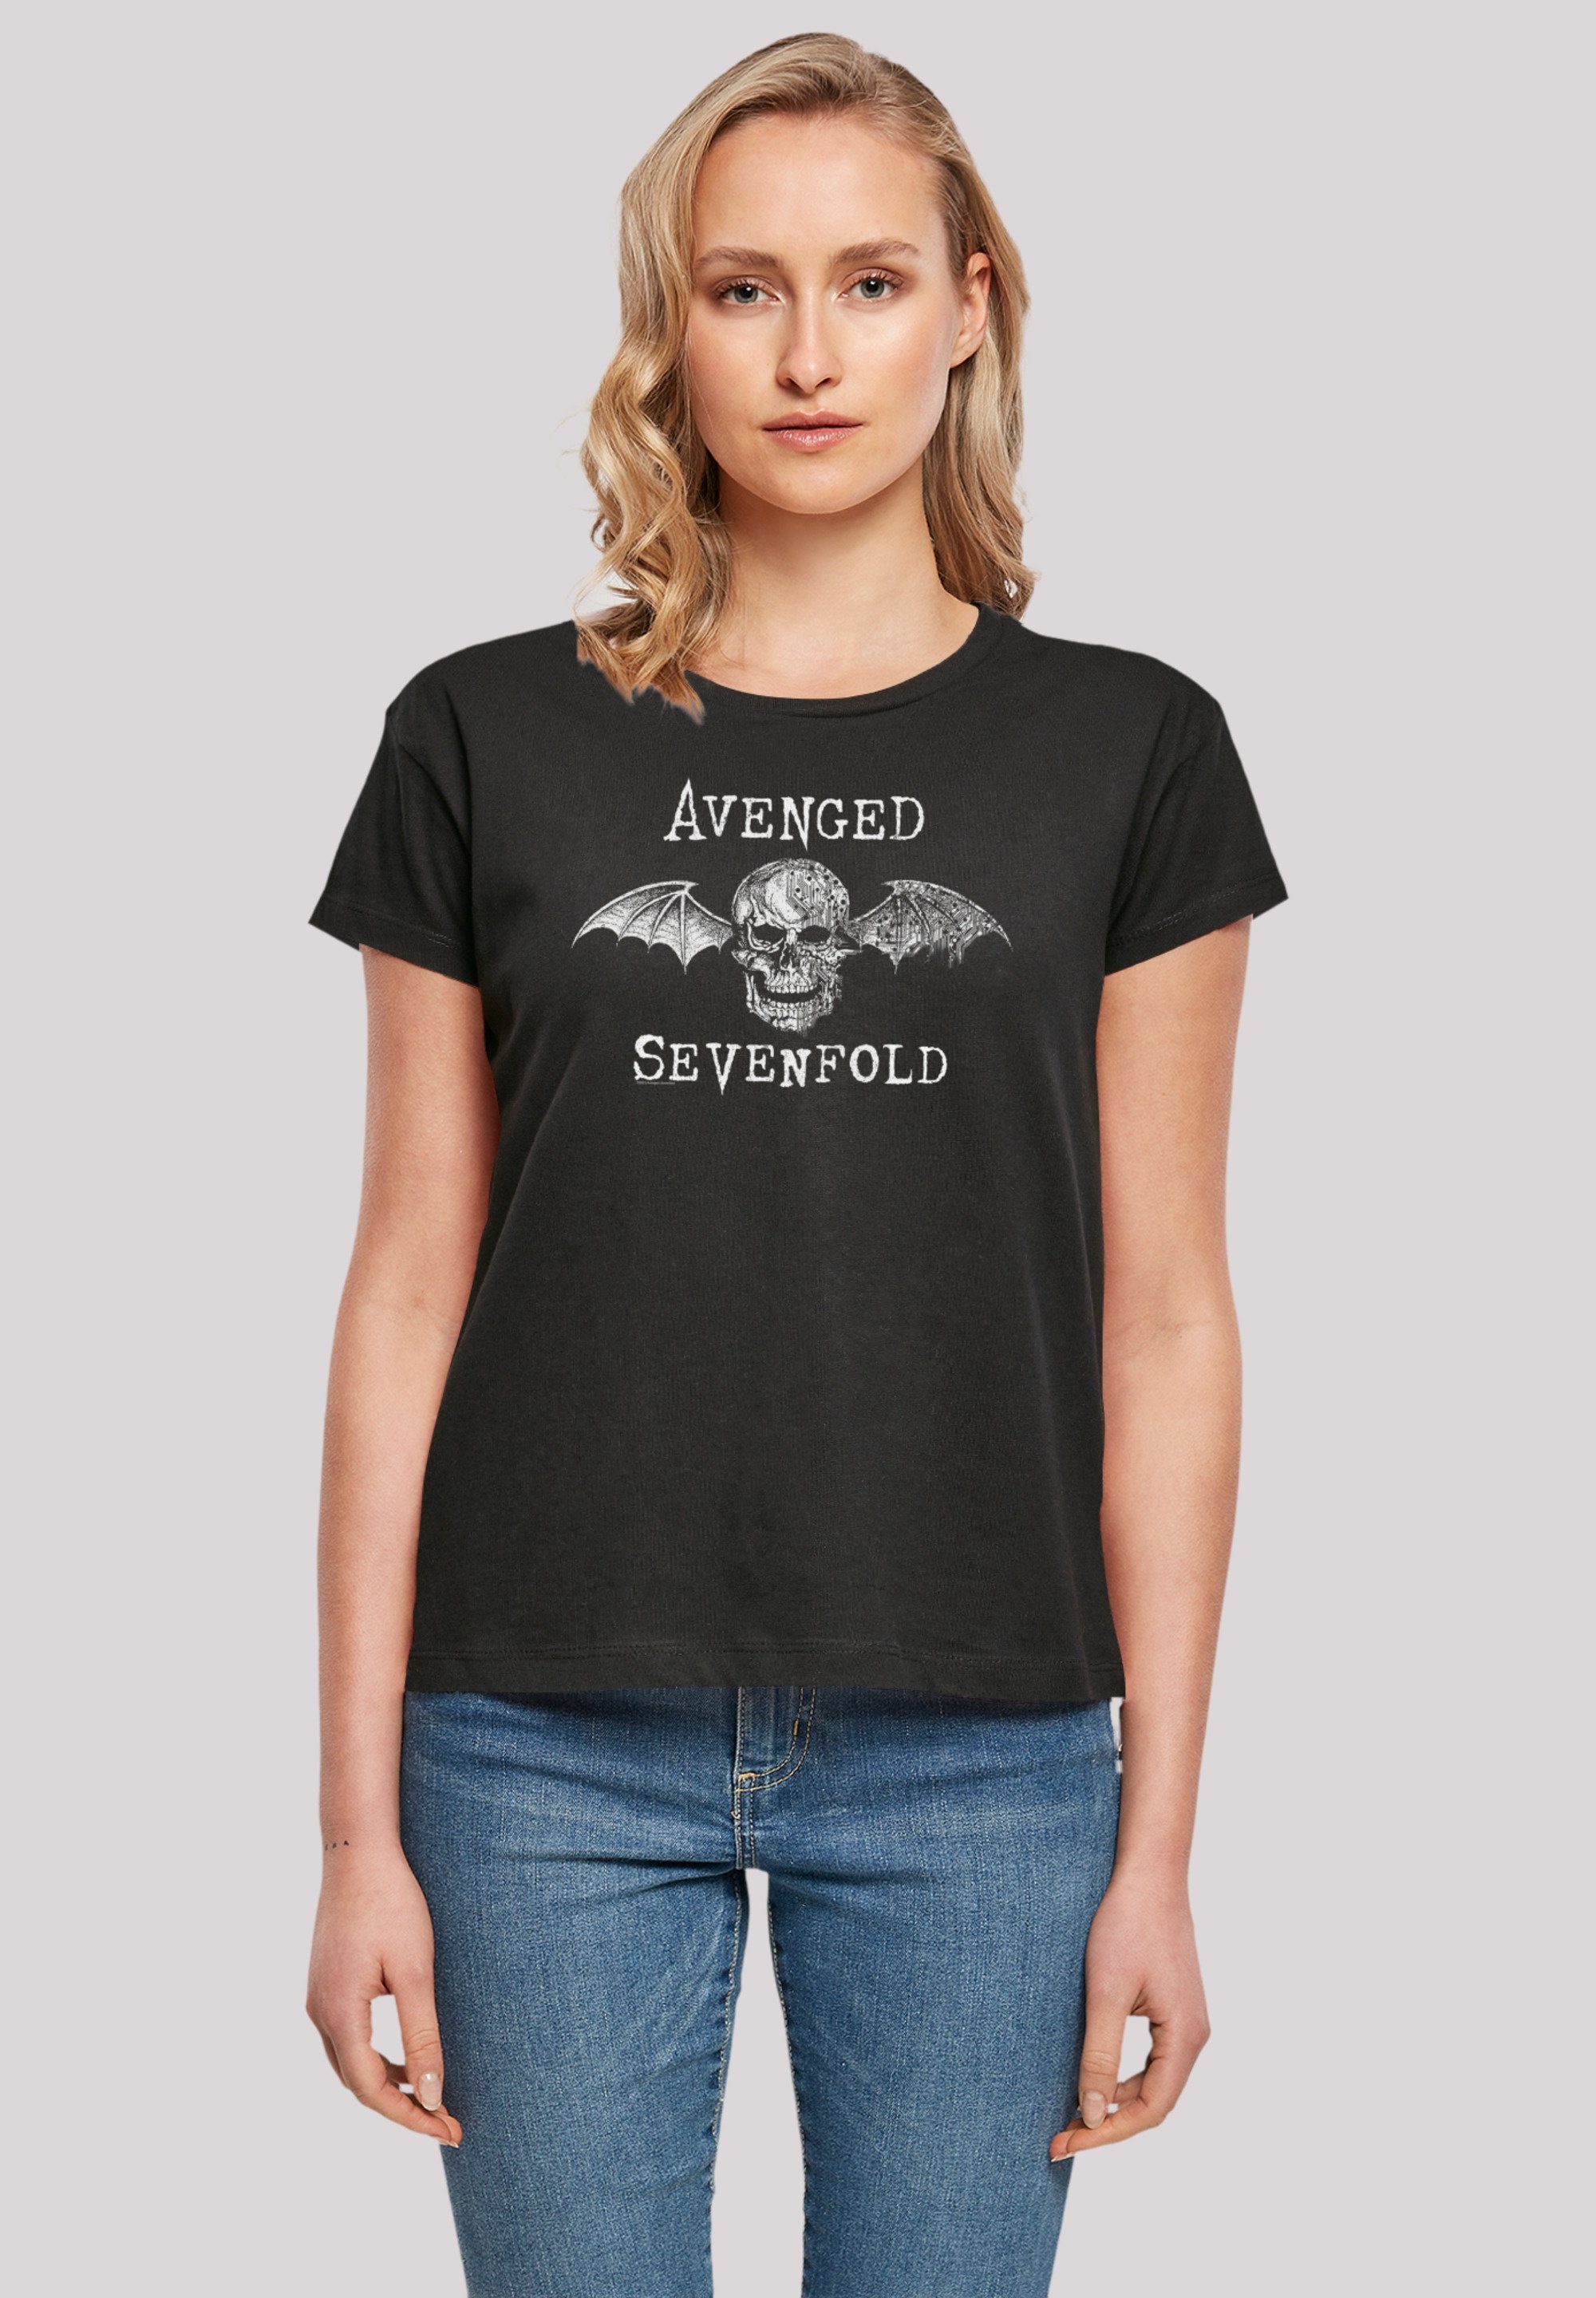 F4NT4STIC T-Shirt Avenged Sevenfold Rock Bat Cyborg Band Qualität, Band, Premium Rock-Musik Metal